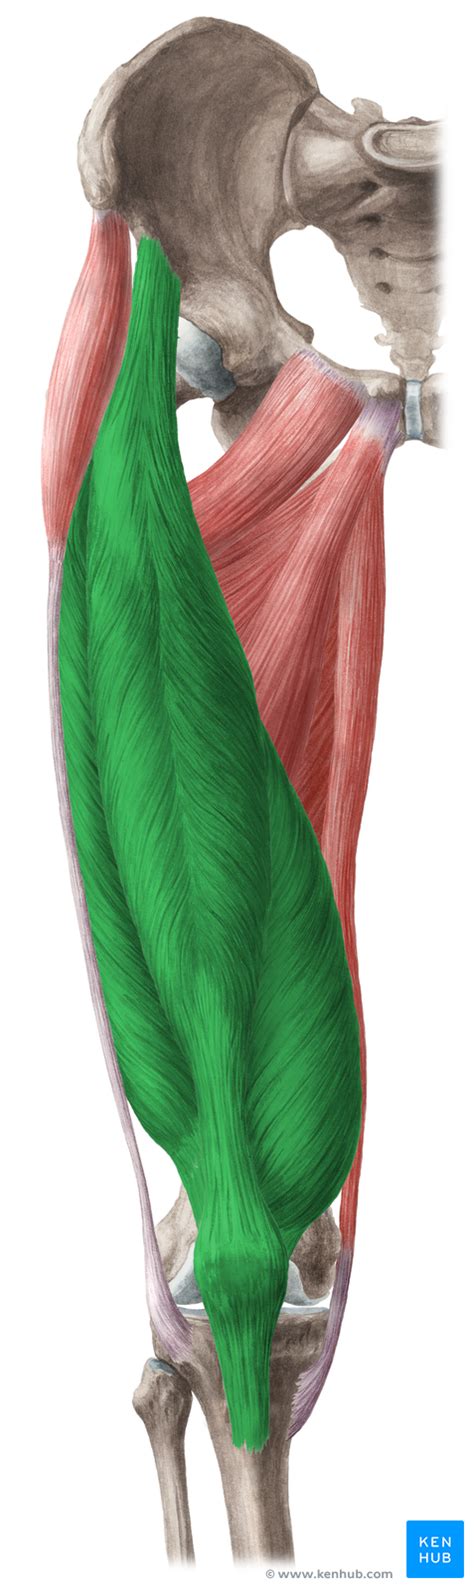 Quadriceps Femoris Muscle Anatomy And Function Kenhub